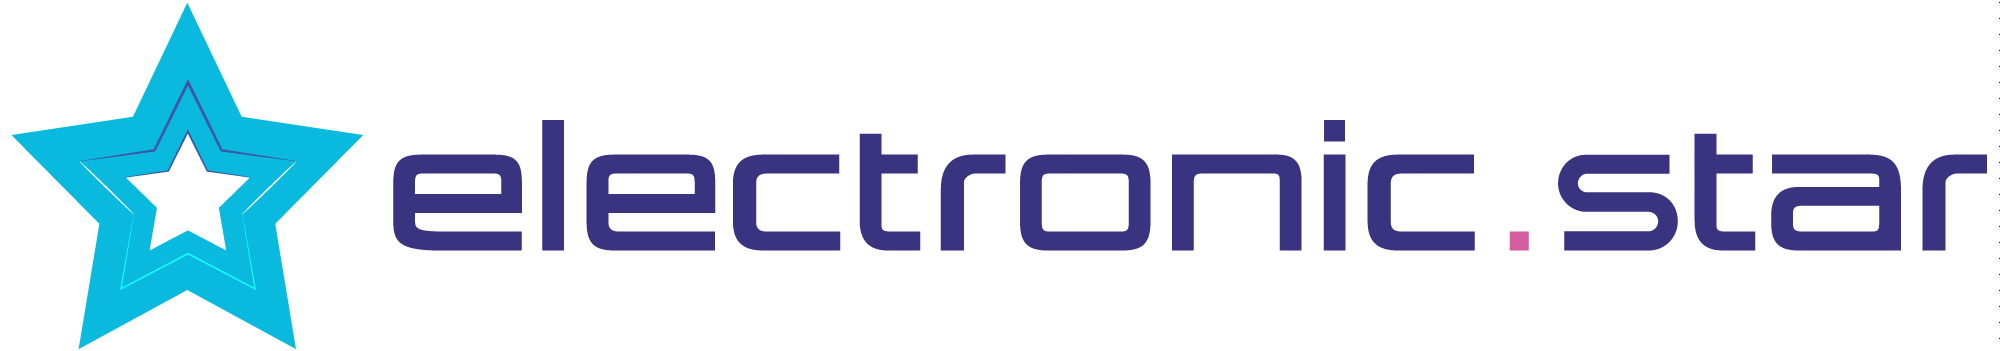 Electronic-star.cz Logo